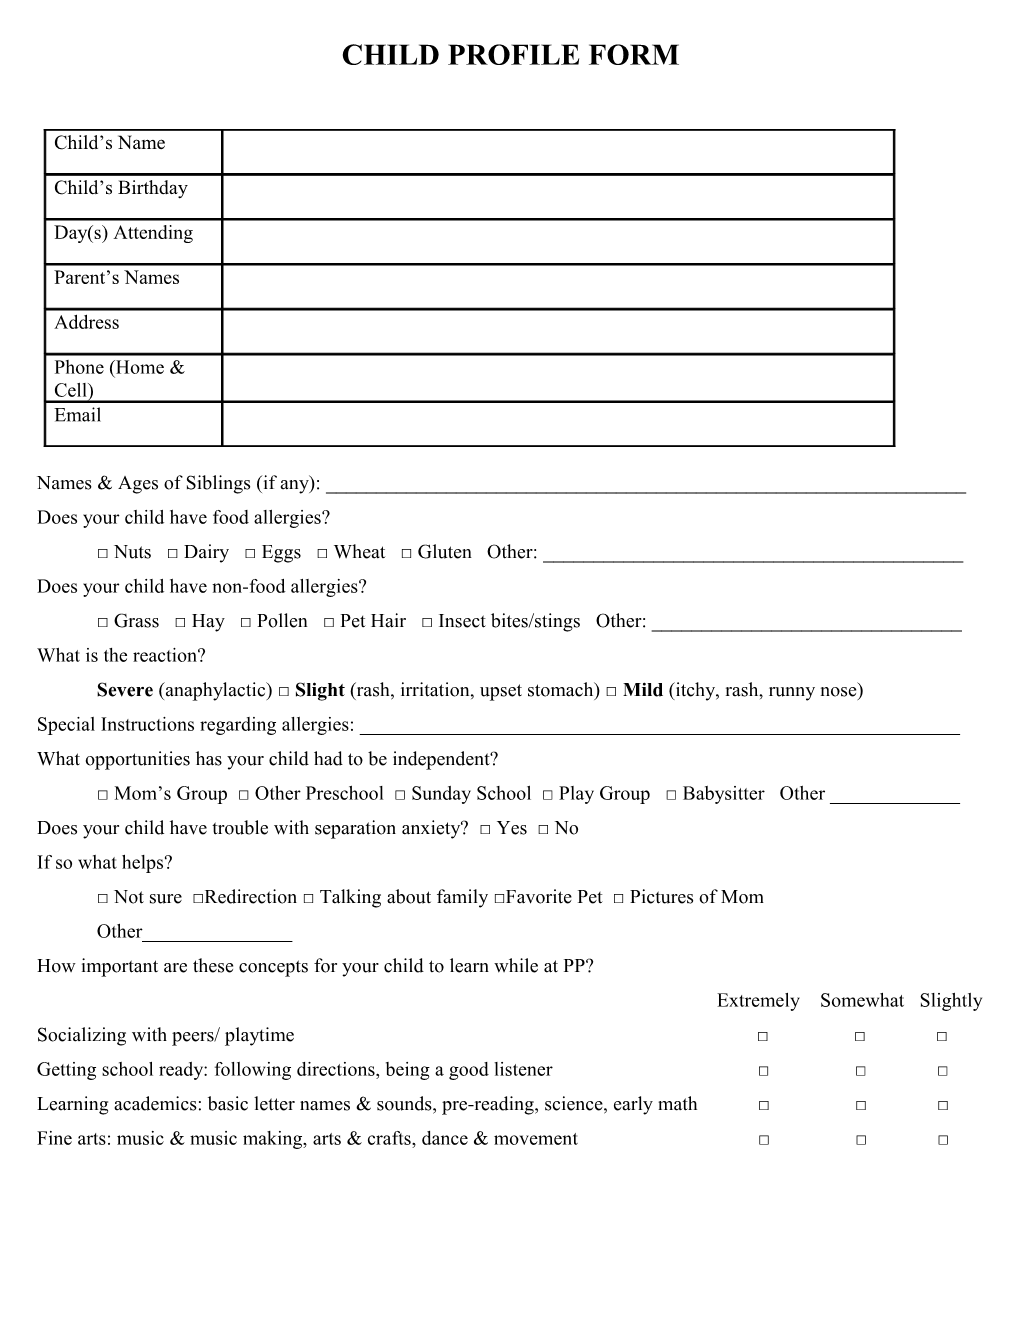 Child Profile Form